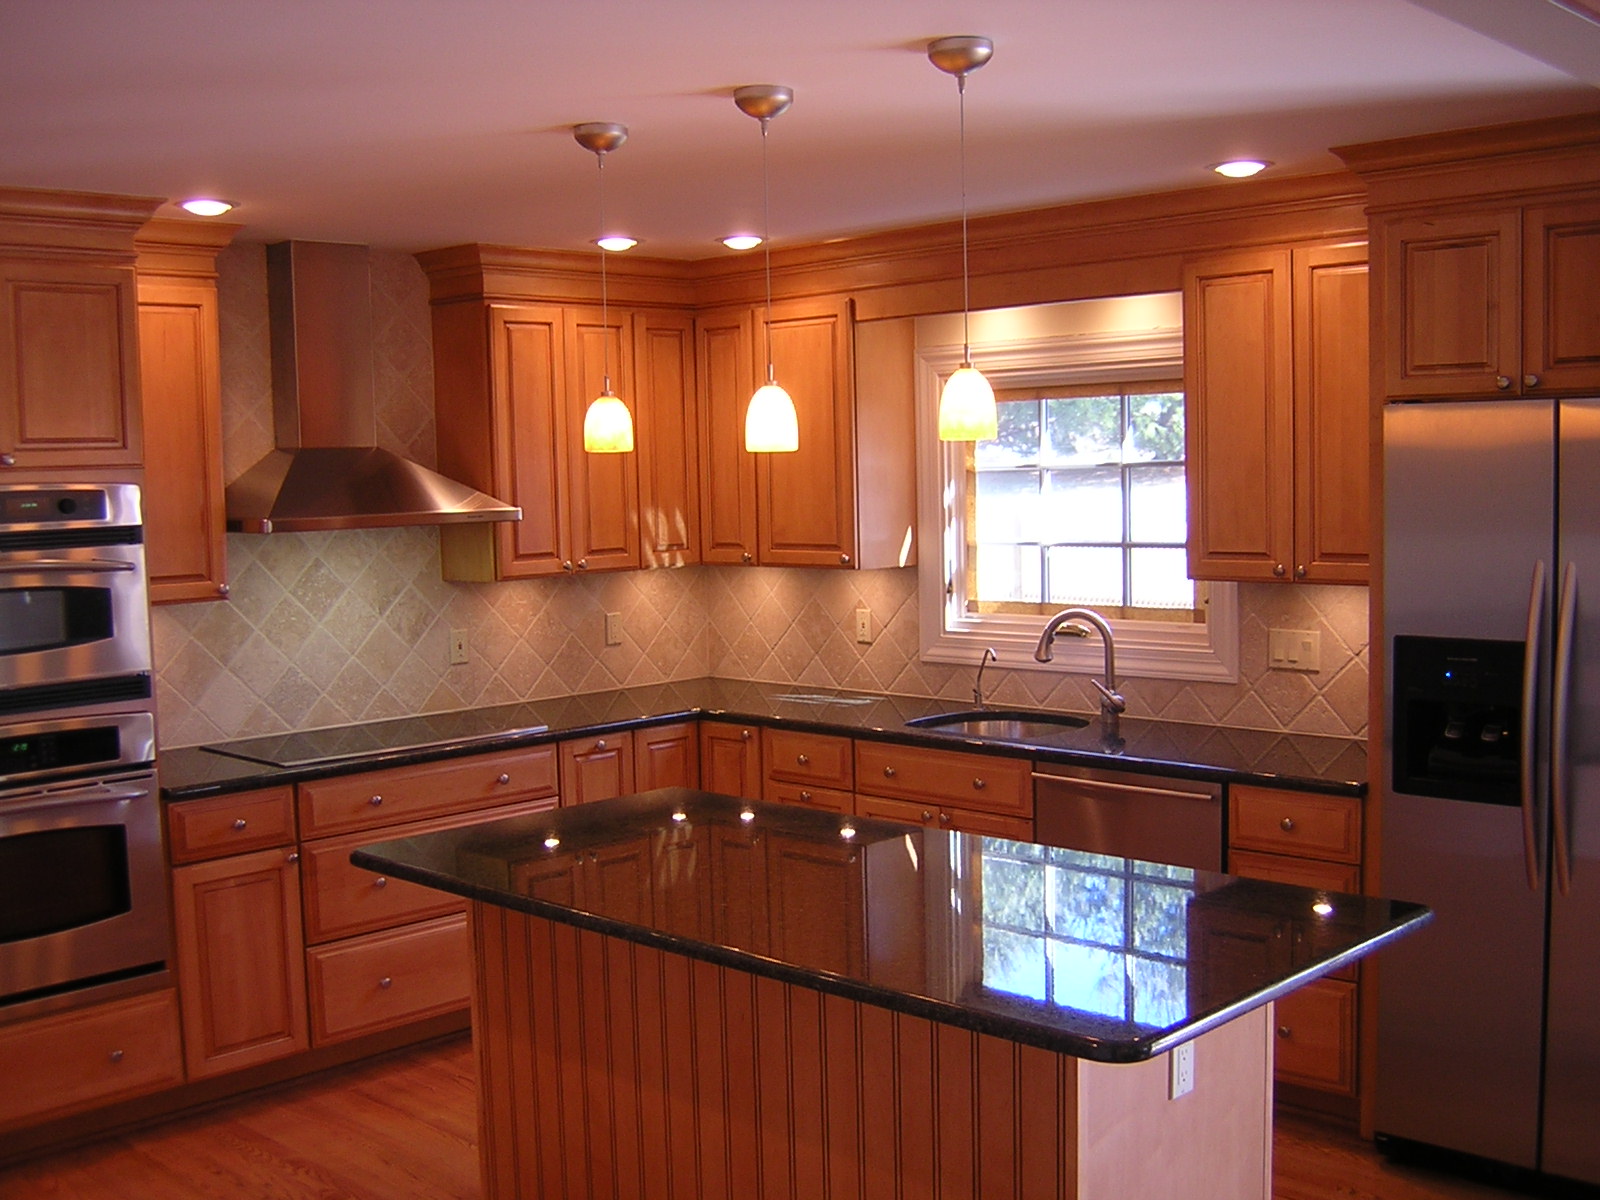 granite kitchen design photos photo - 2